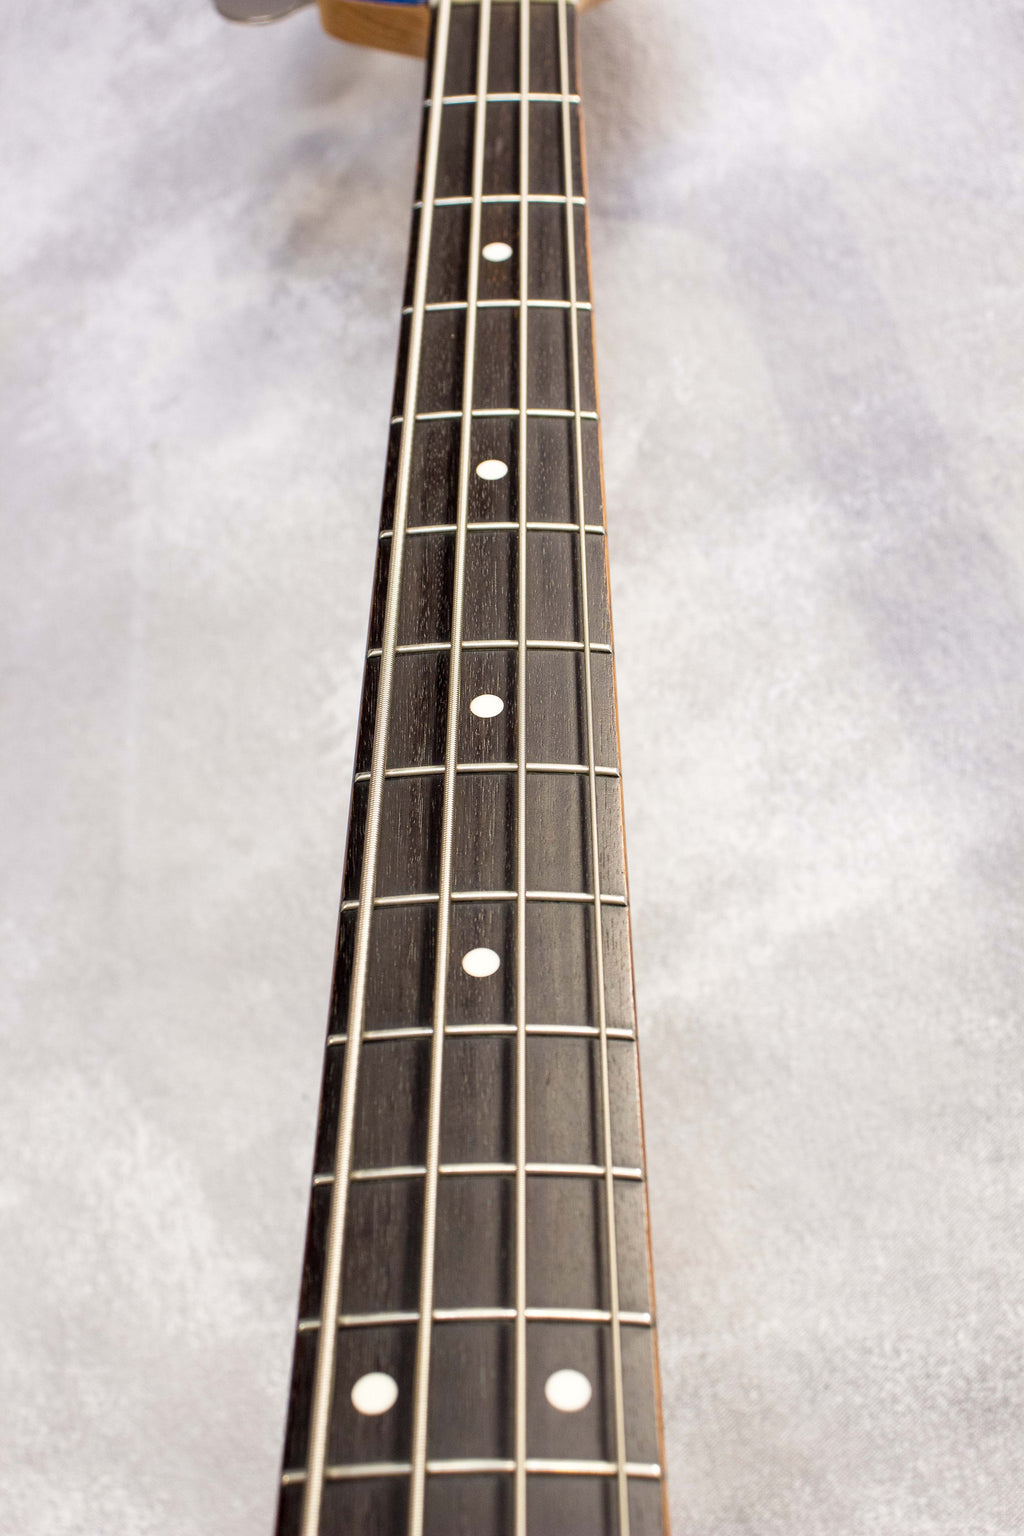 Fender Japan Aerodyne Jazz Bass Lake Placid Blue 2014